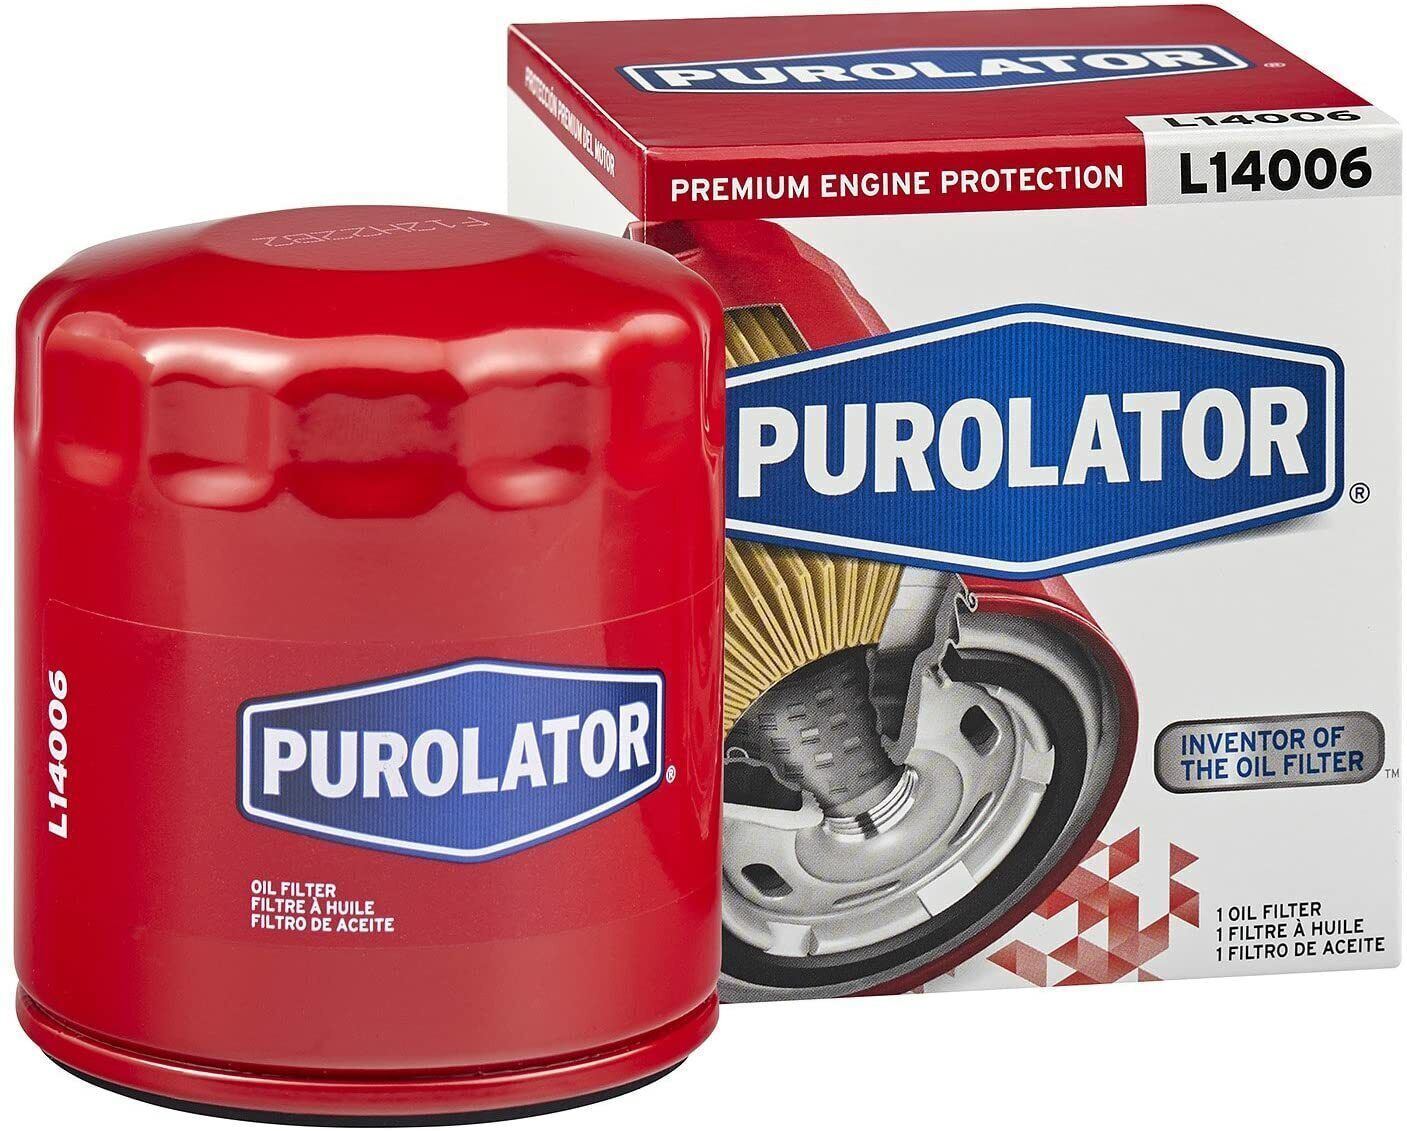 Purolator L14006 Premium Engine Protection Spin On Oil Filter